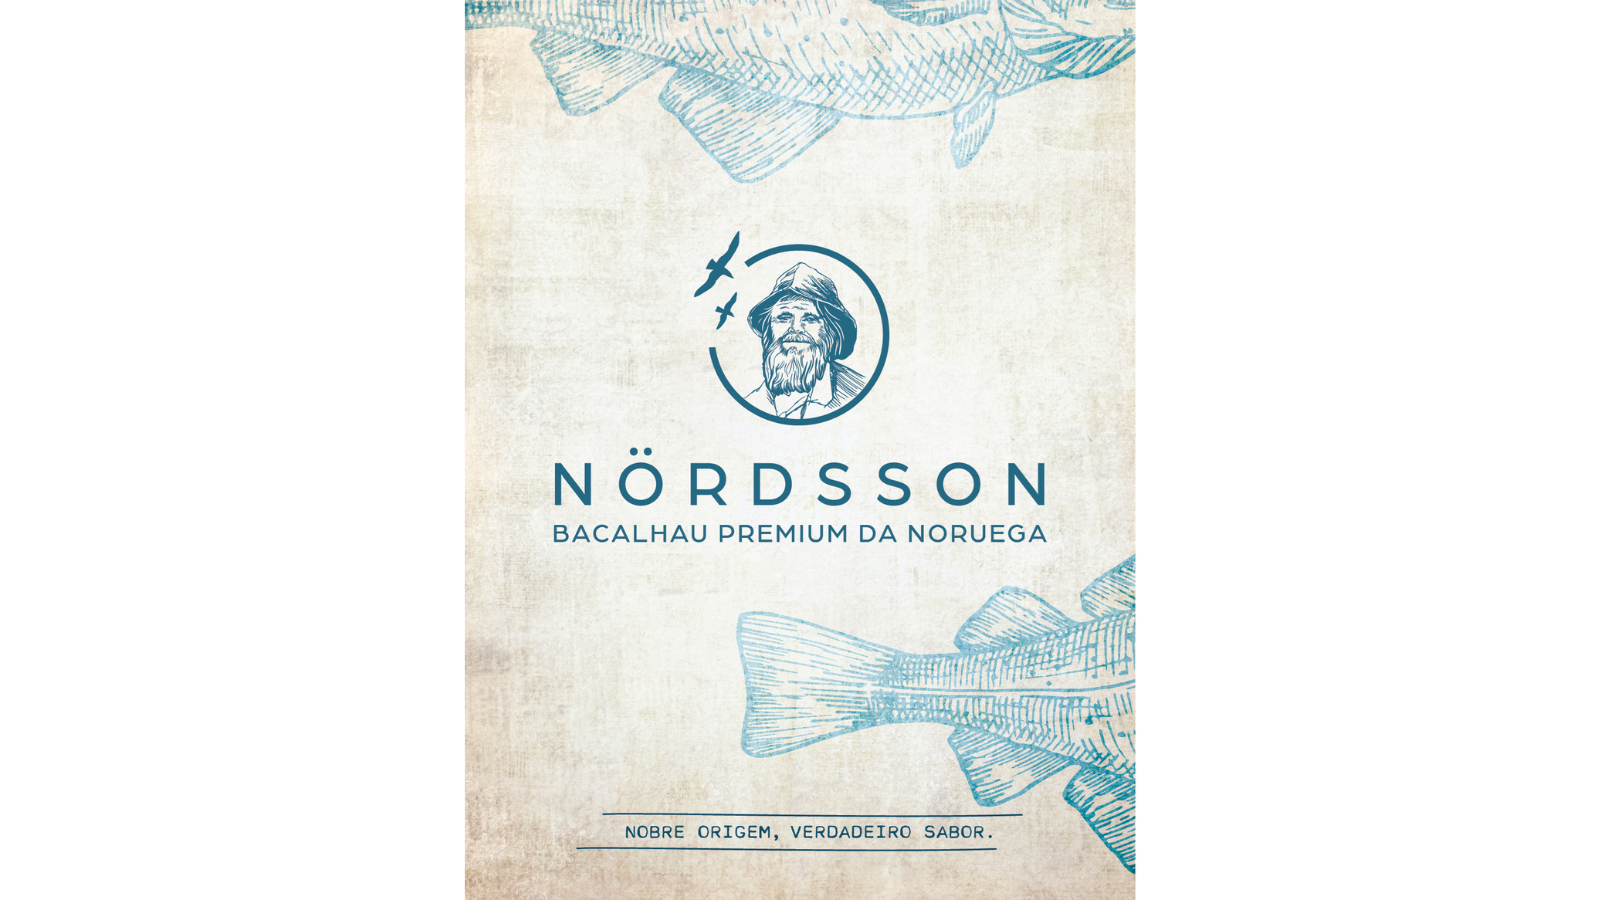 Bacalhau Nordsson Noruega